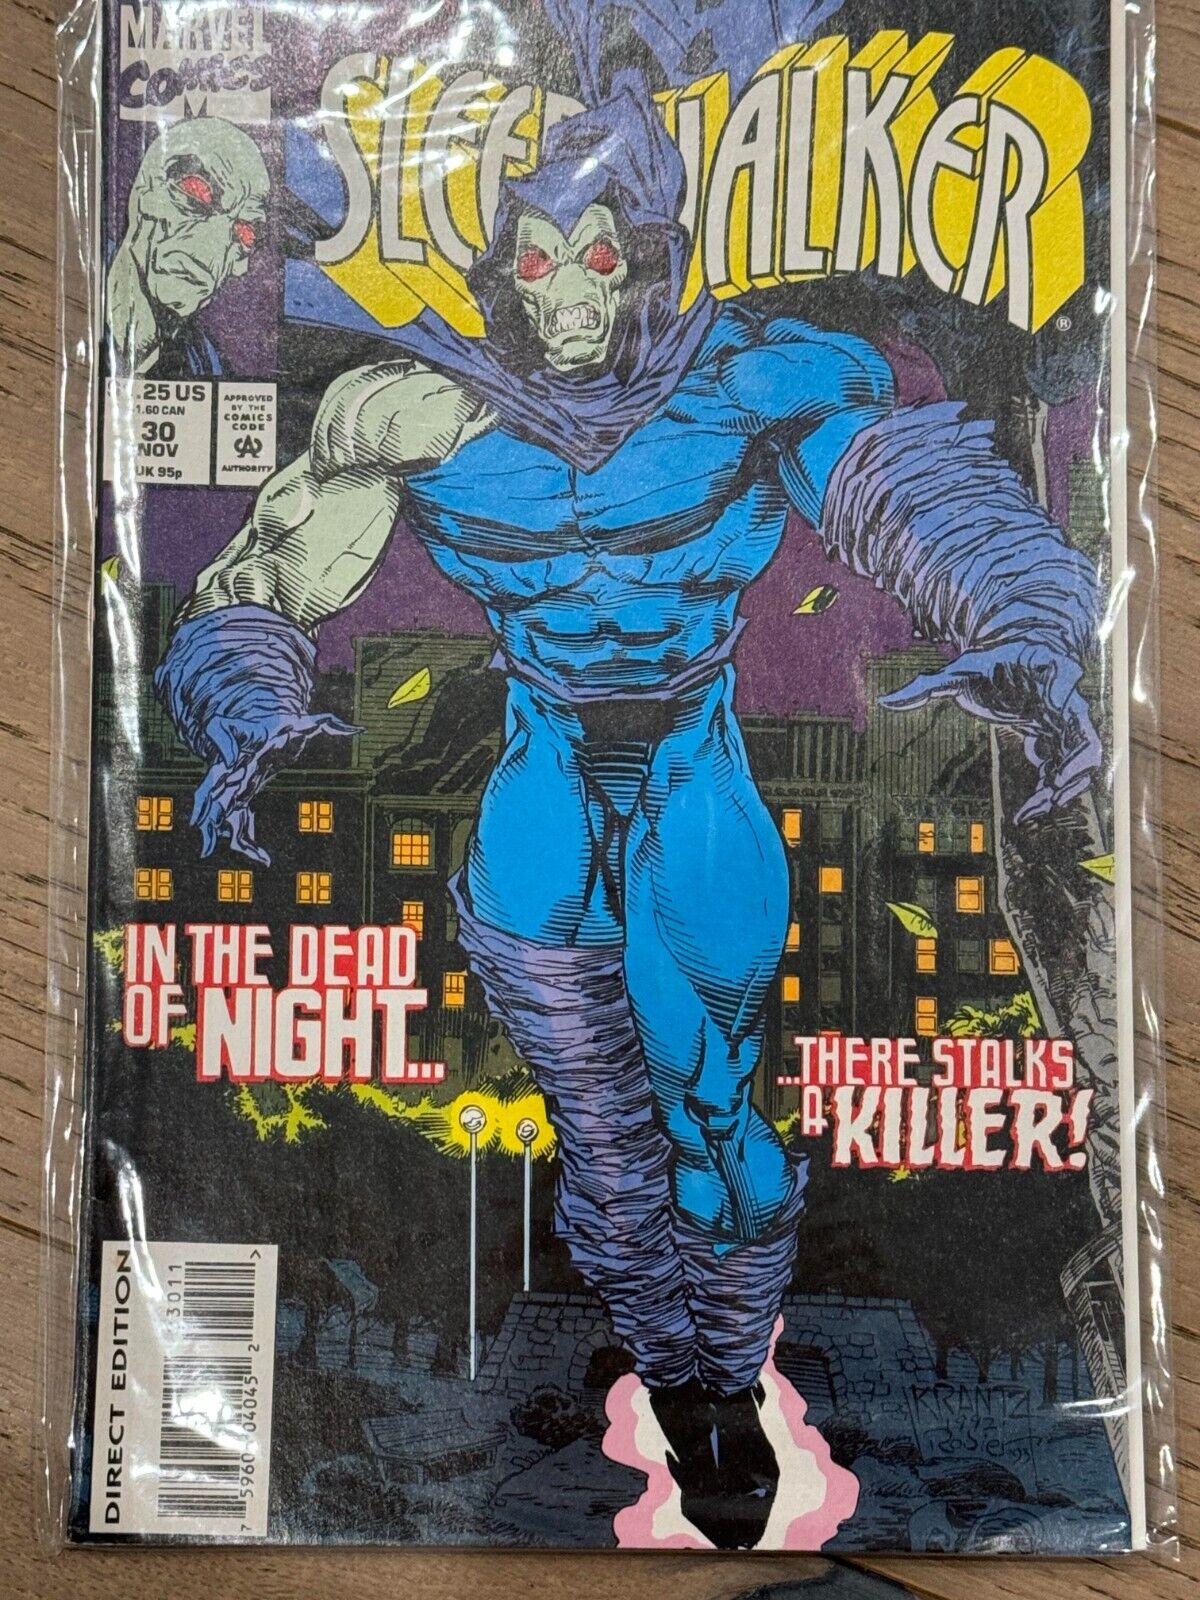 Sleepwalker Issue #30 Marvel Comics November 1993 MINT